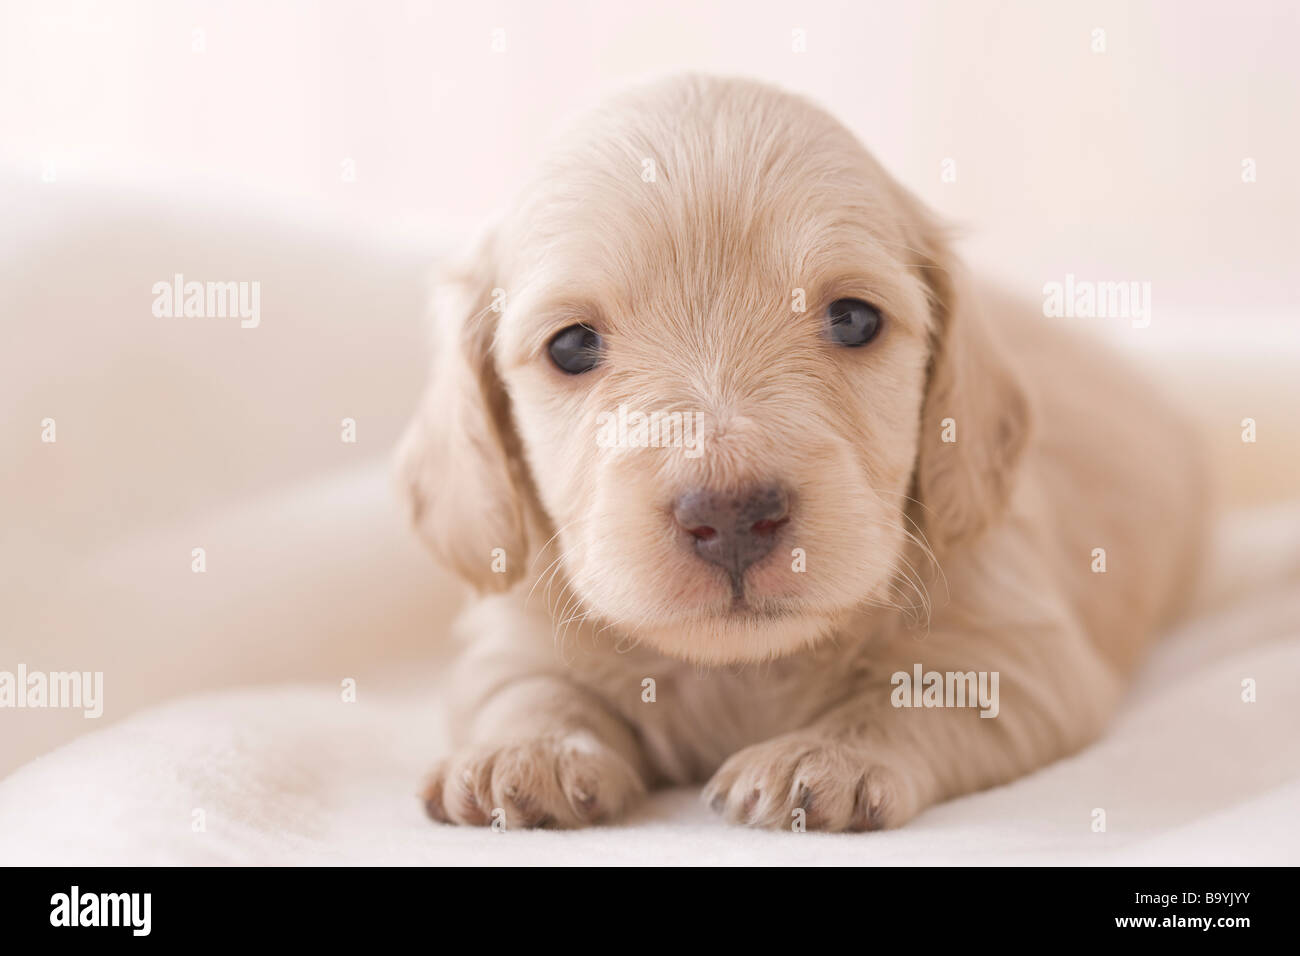 Miniature dachshund on a blanket Stock Photo